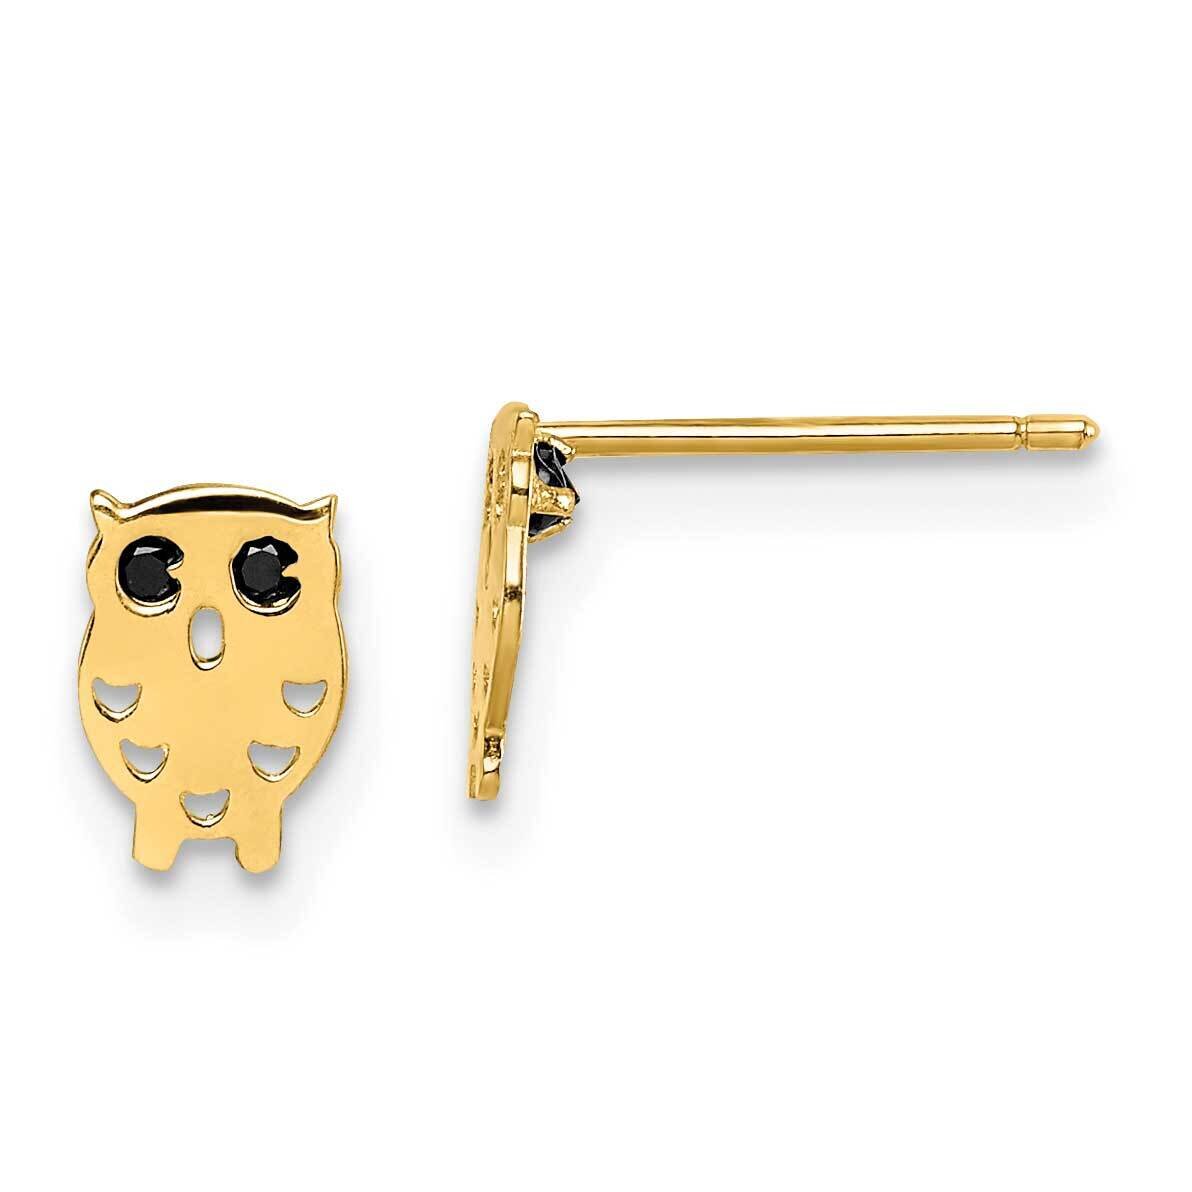 Black Owl Post Earrings 14k Gold CZ Diamond SE2901